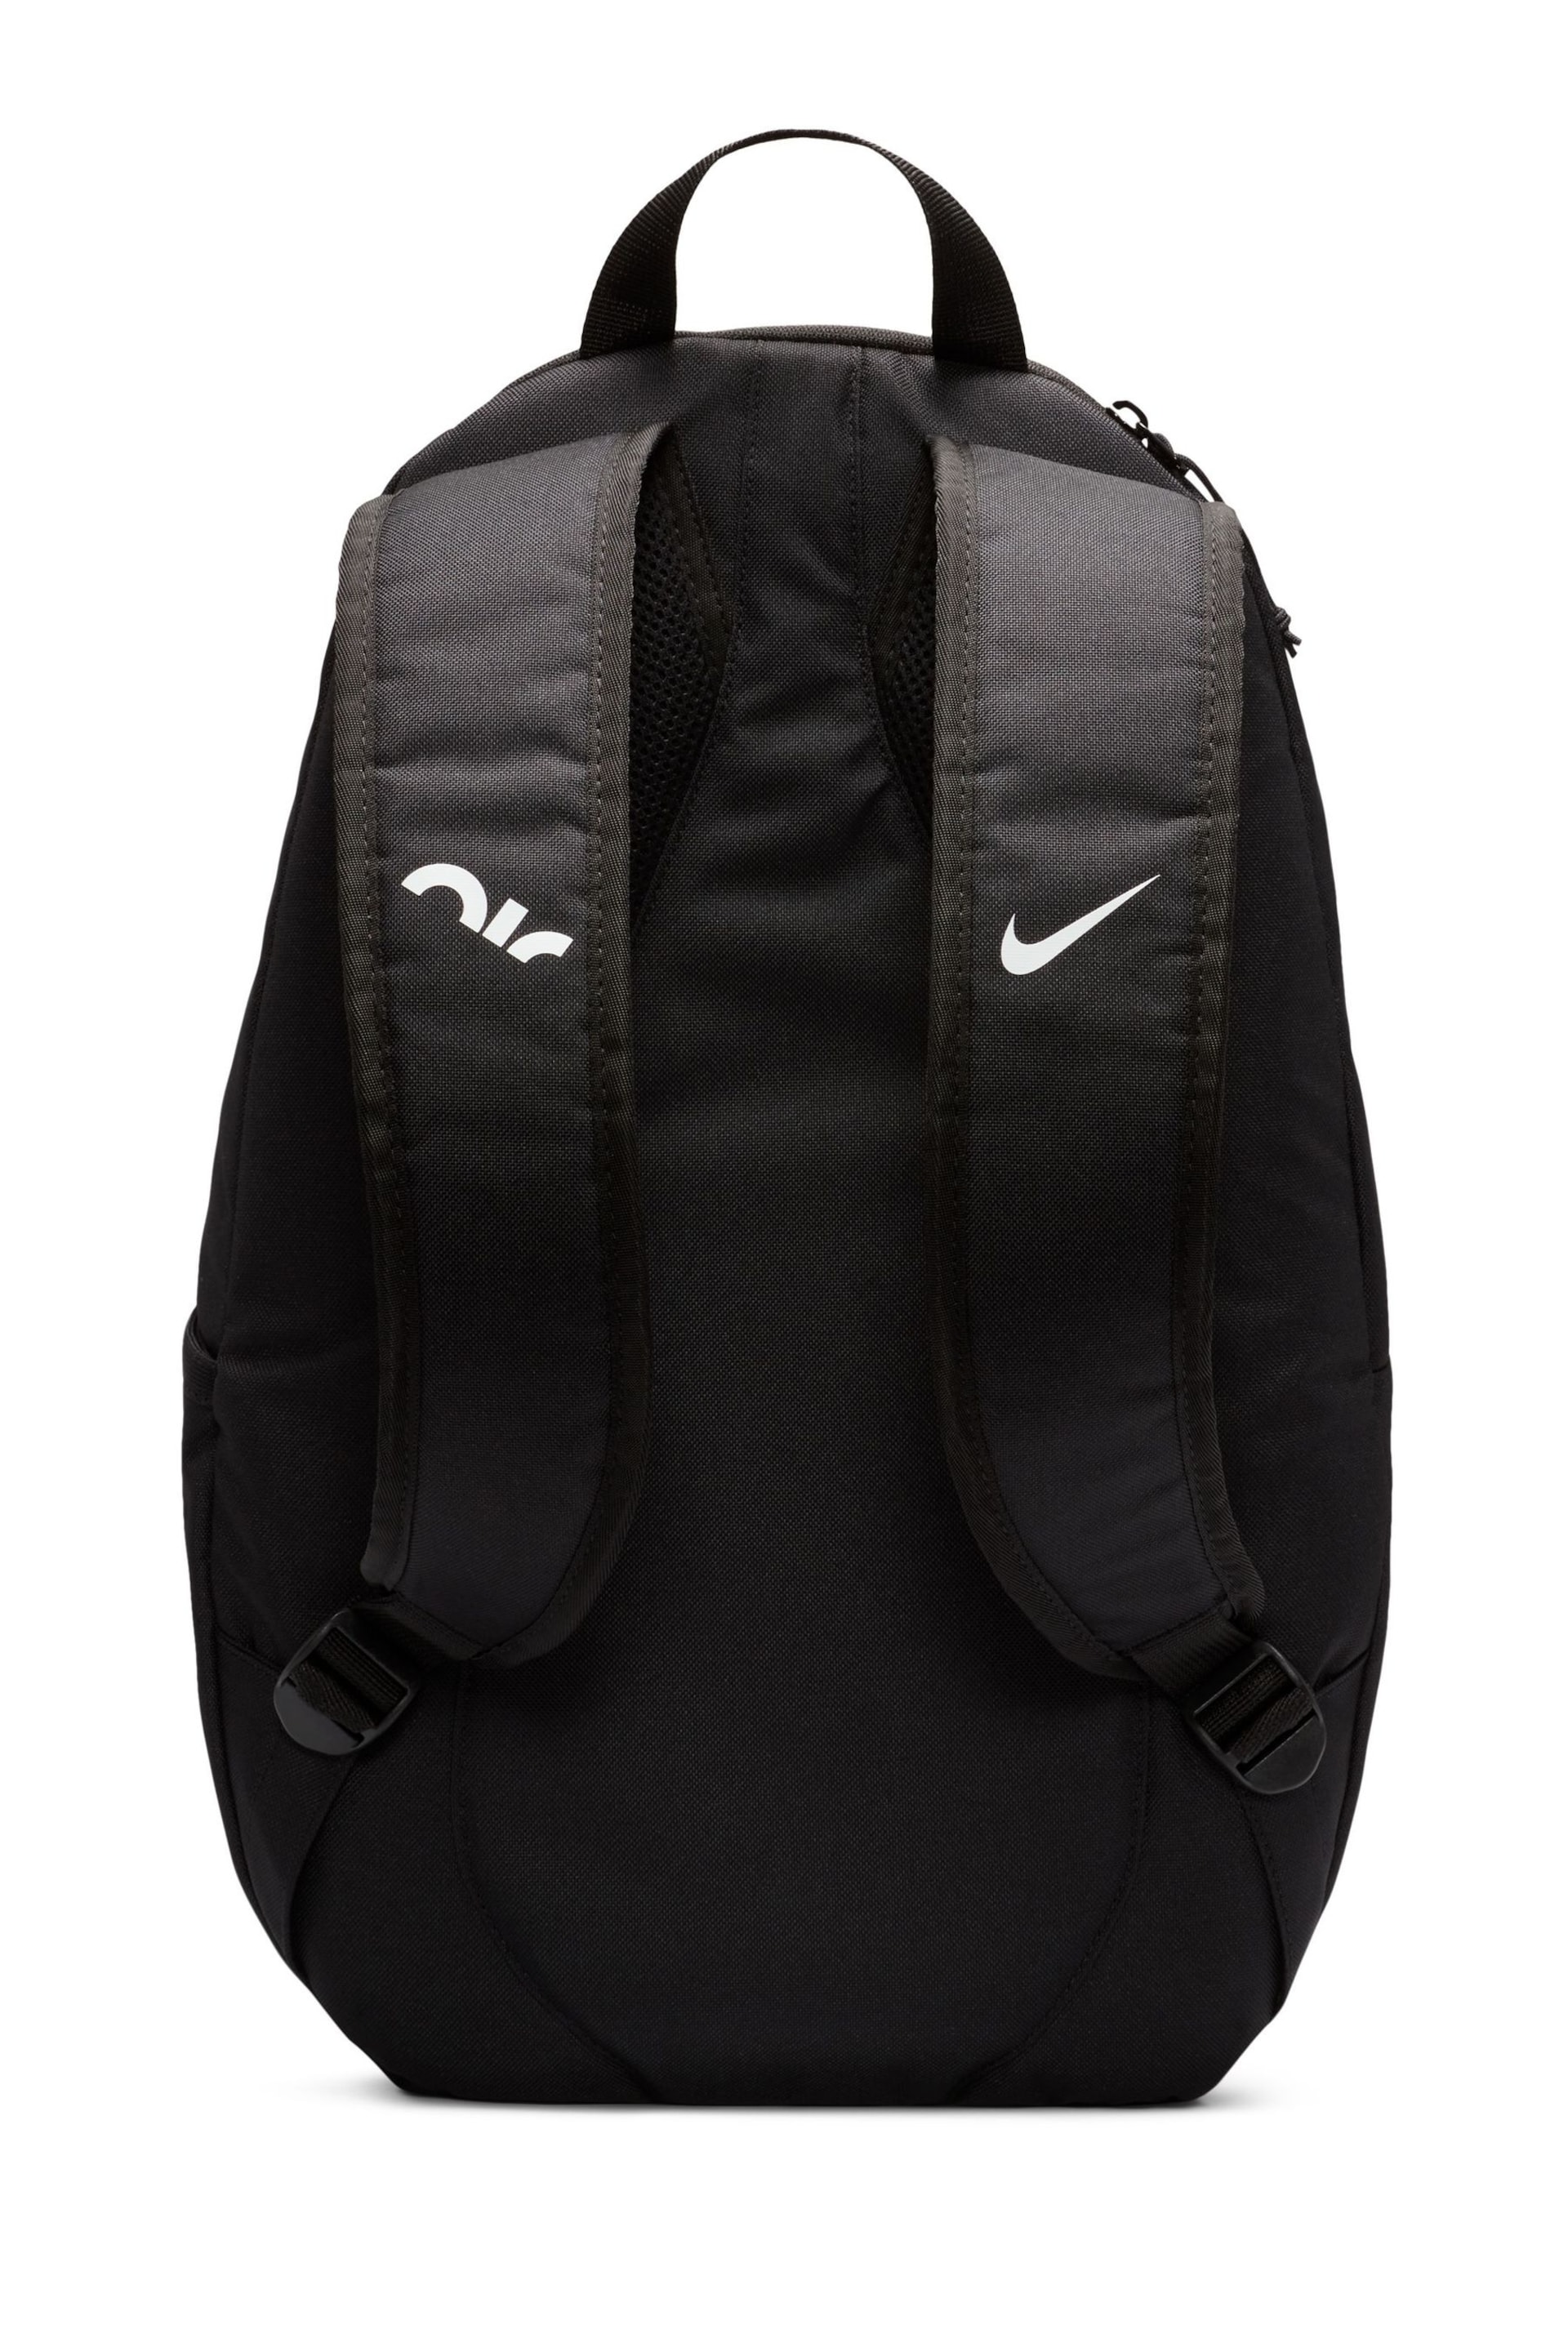 Nike Black Air GRX Backpack - Image 4 of 9